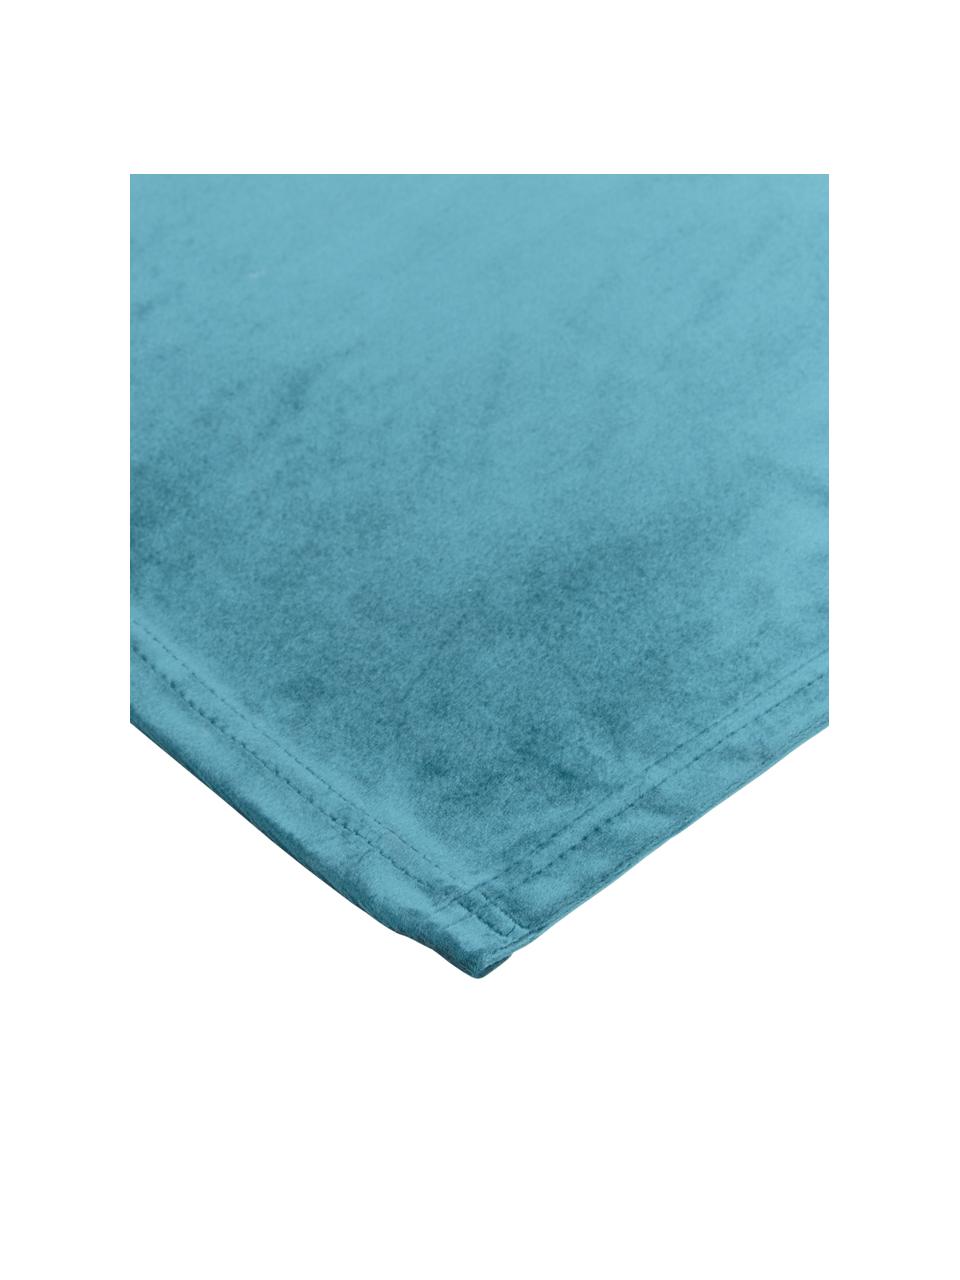 Fluwelen placemats Simone, 2 stuks, 100% polyester fluweel, Jadegroen, 35 x 45 cm